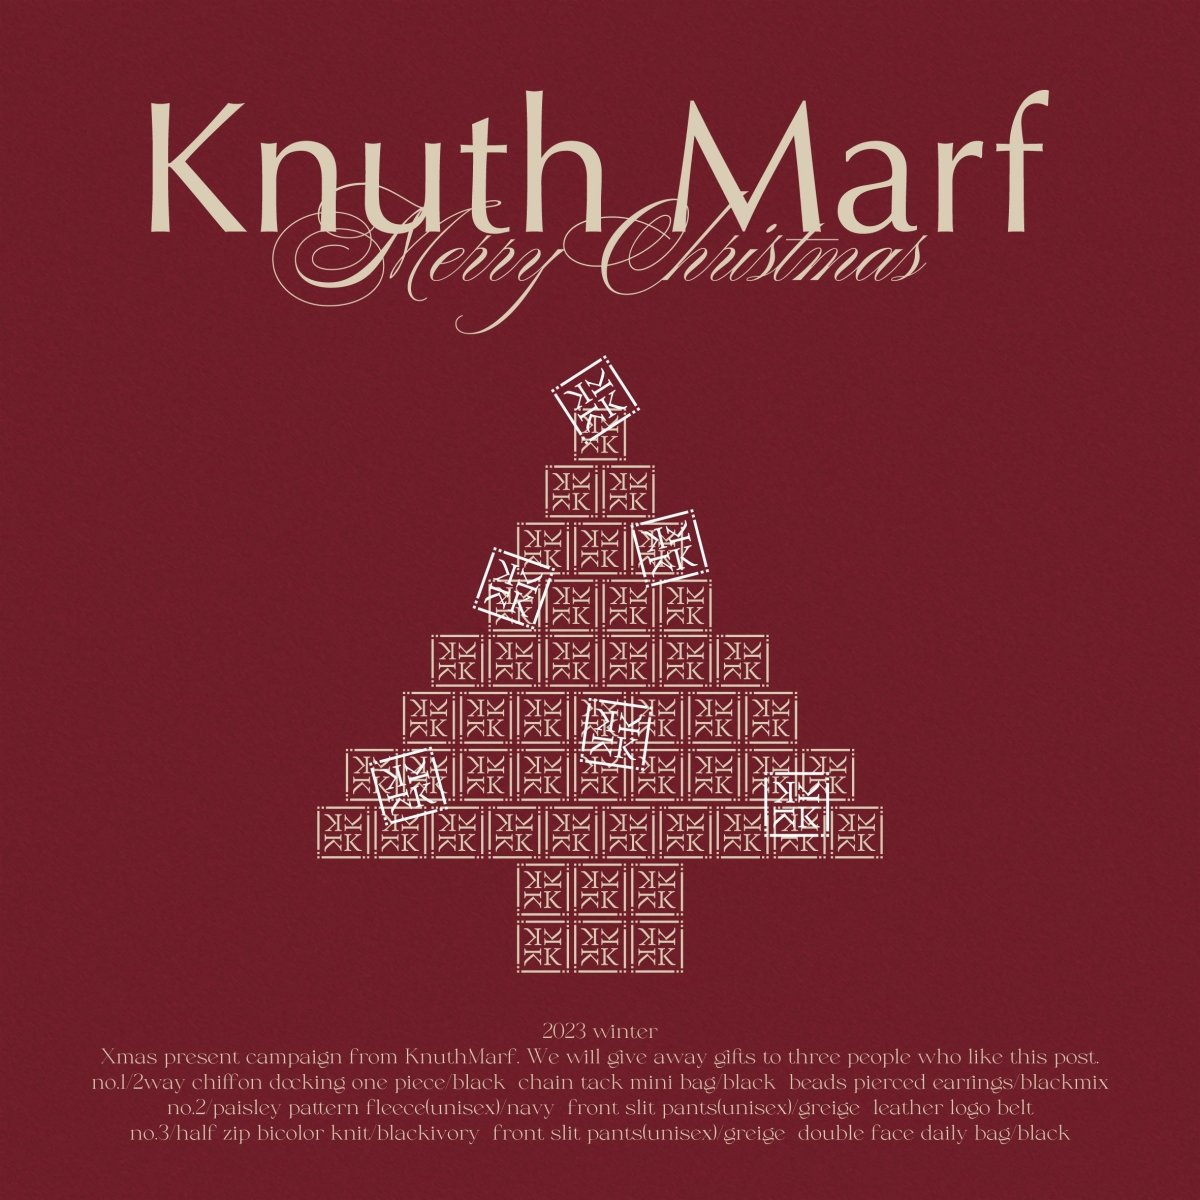 Christmas present campaign | KNUTH MARF